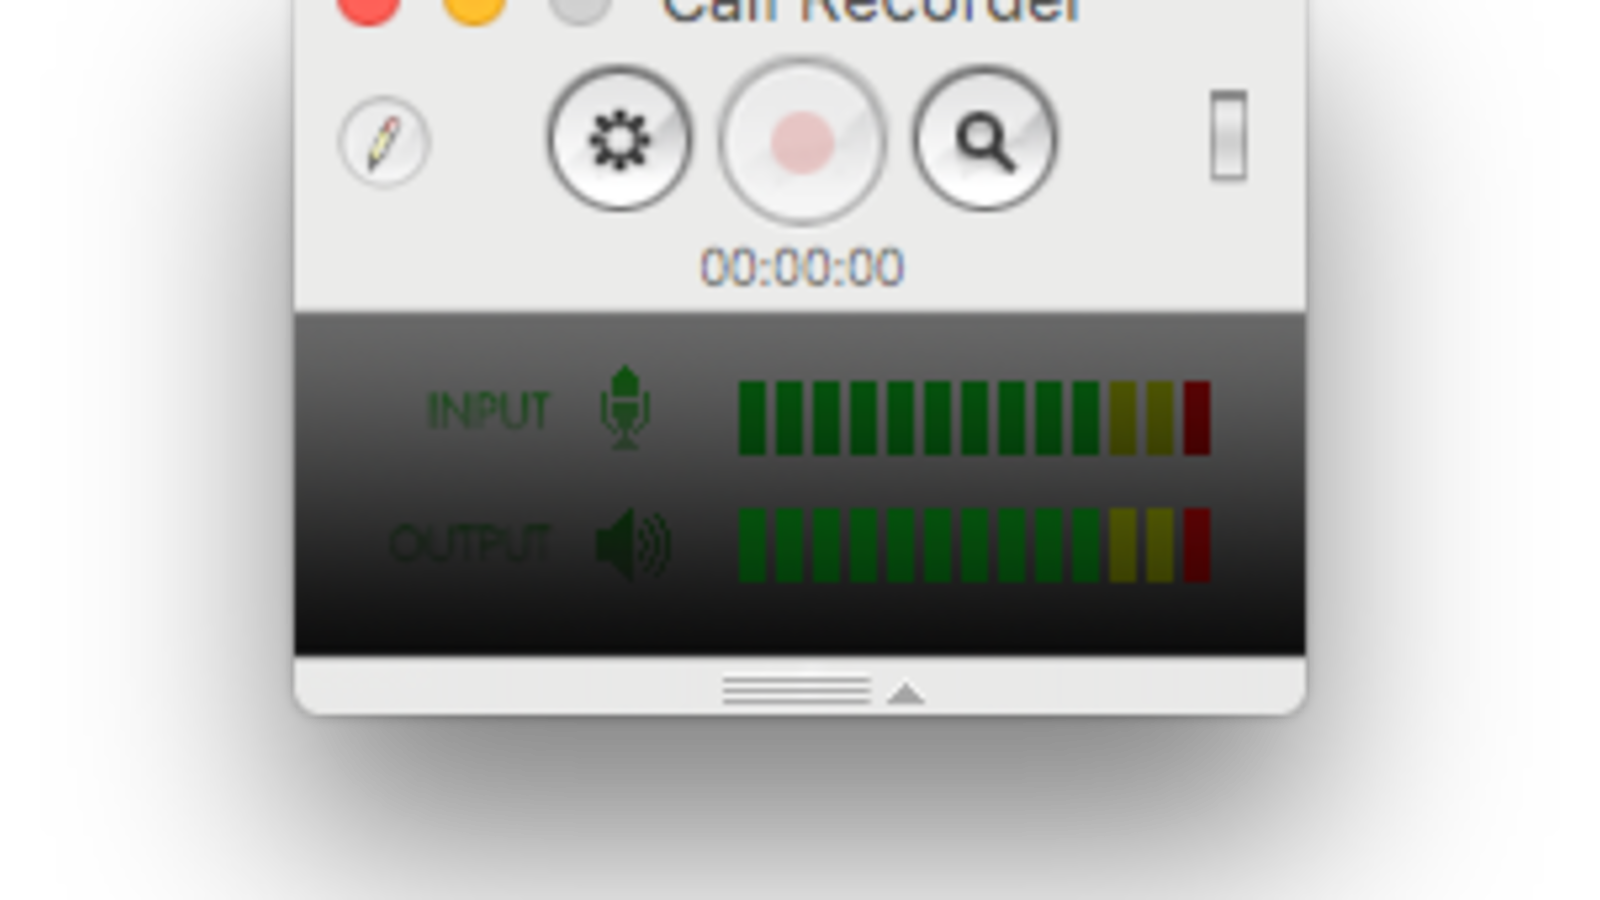 Skype recorder for mac free